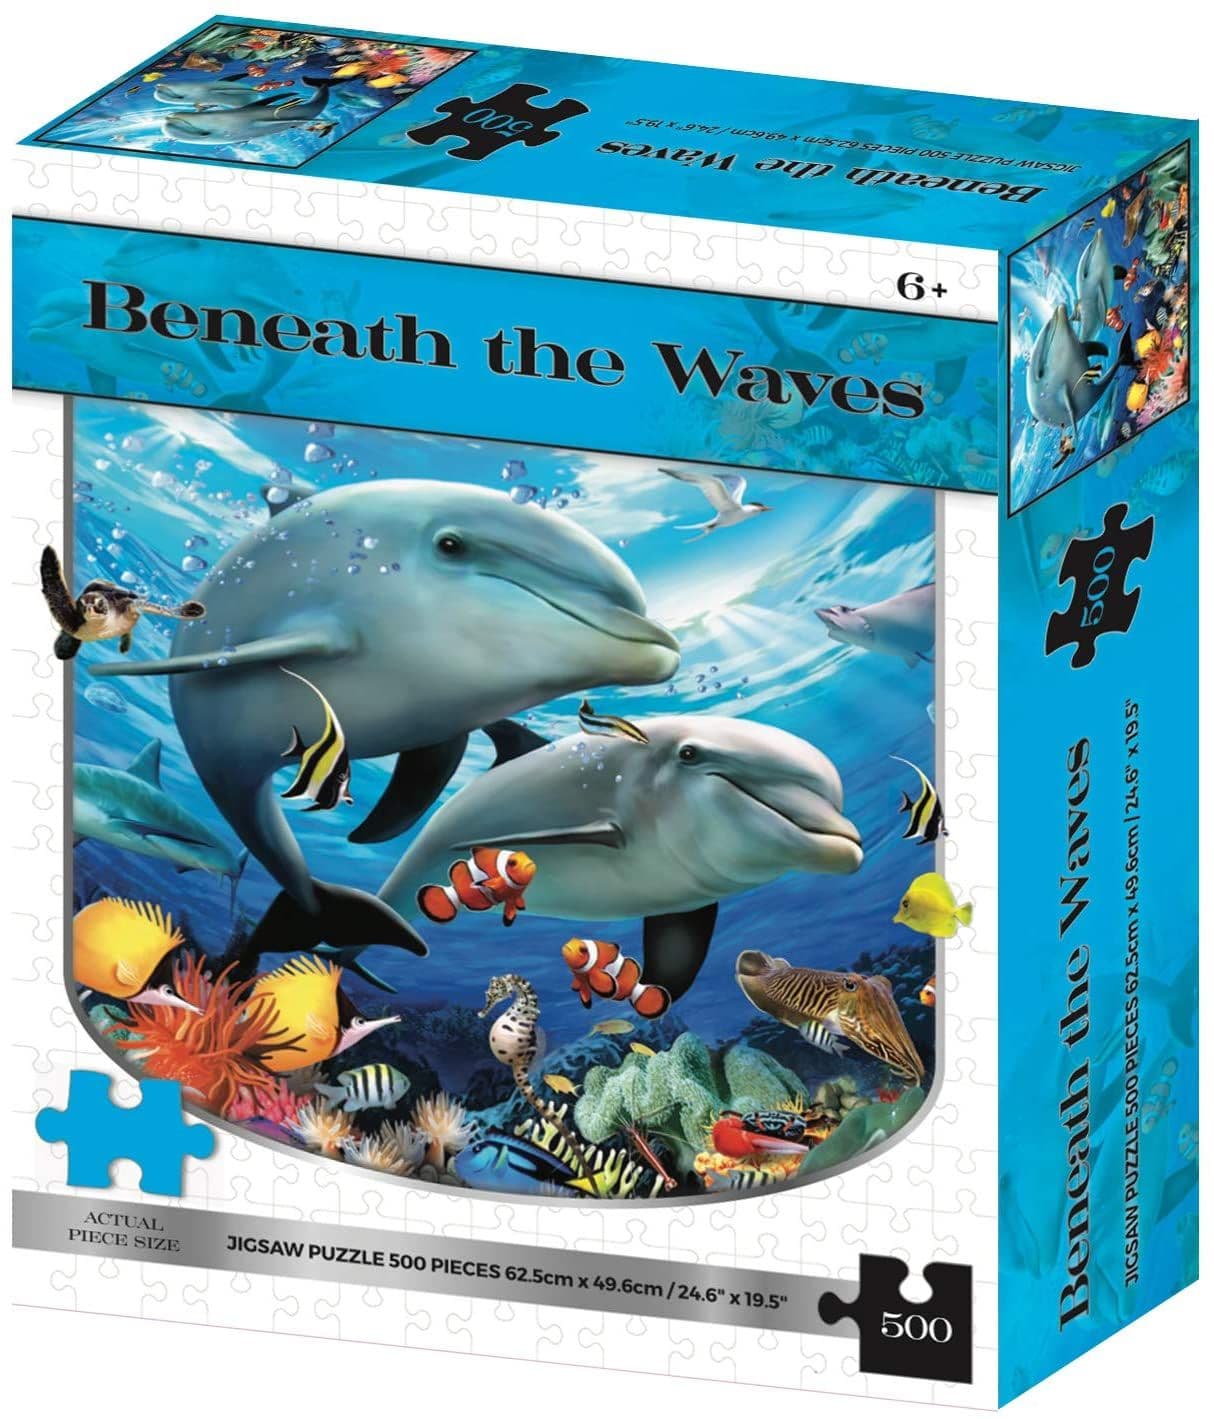 Kidicraft - Beneath the Waves - 500 Piece Jigsaw Puzzle